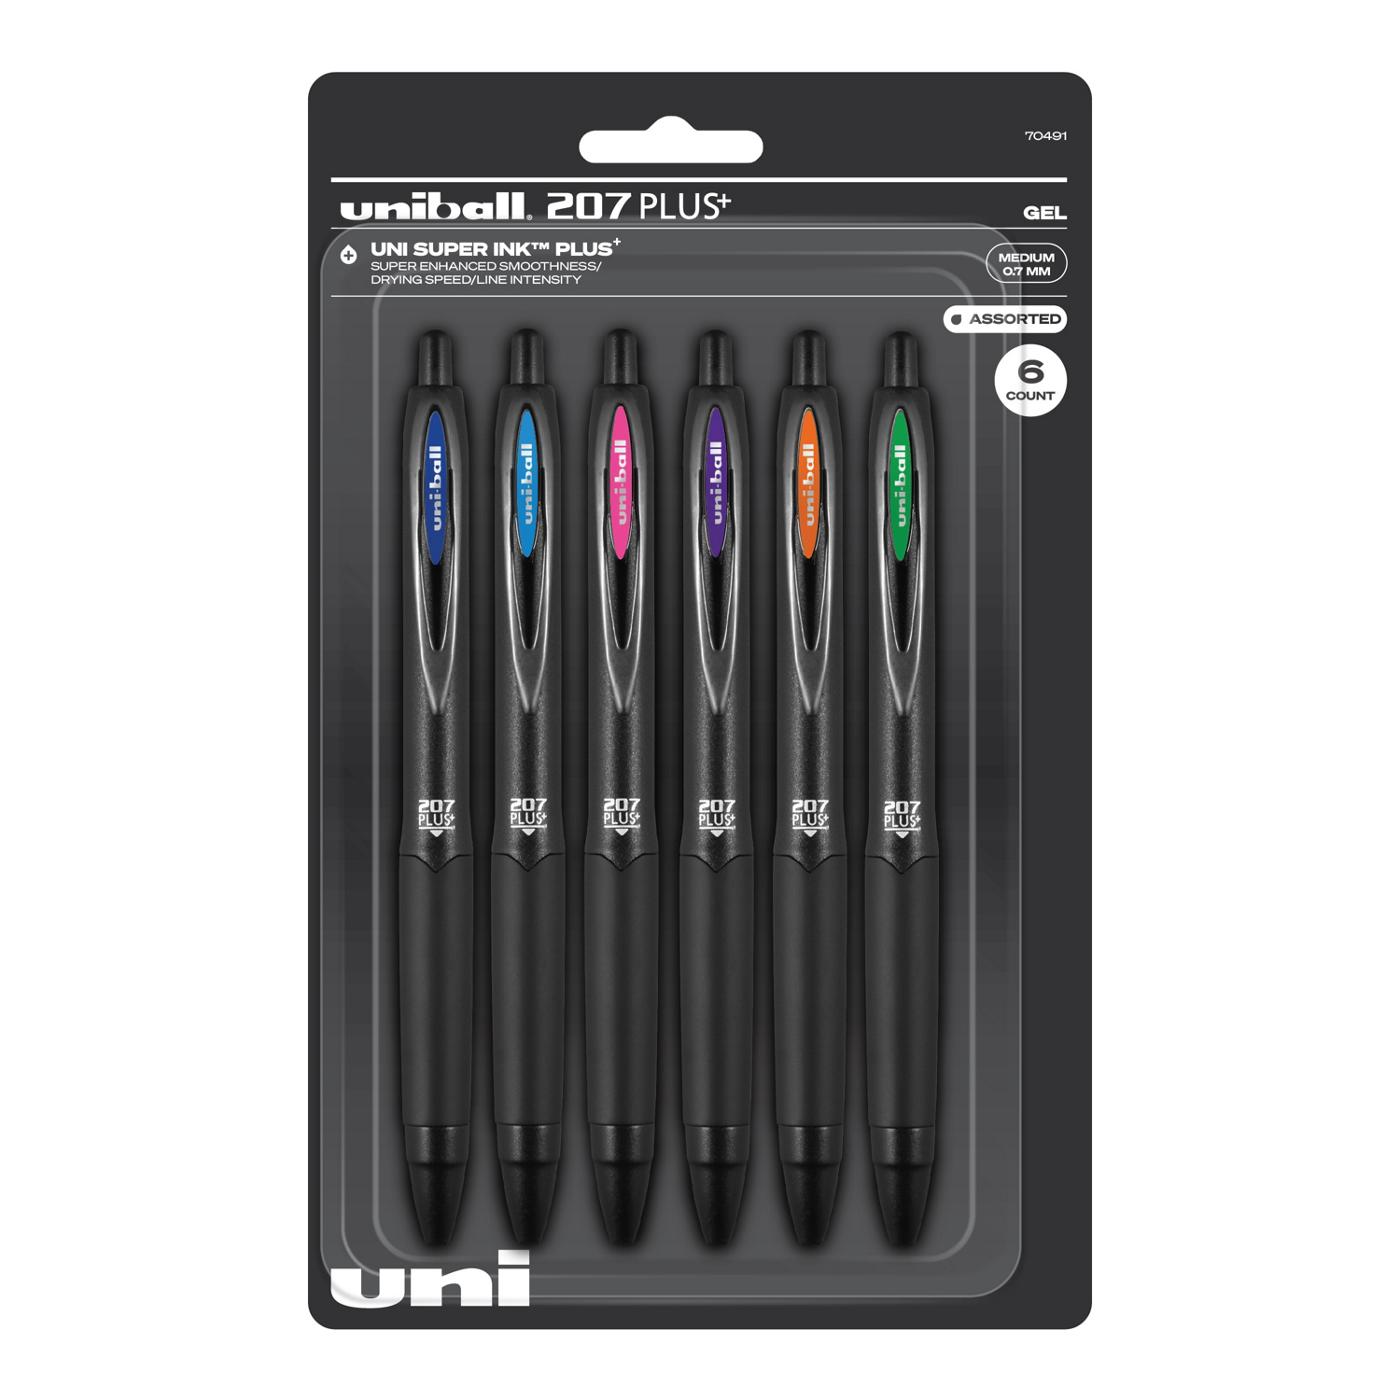 uniball 207 Plus+ 0.7mm Retractable Gel Pens - Assorted Ink; image 1 of 2